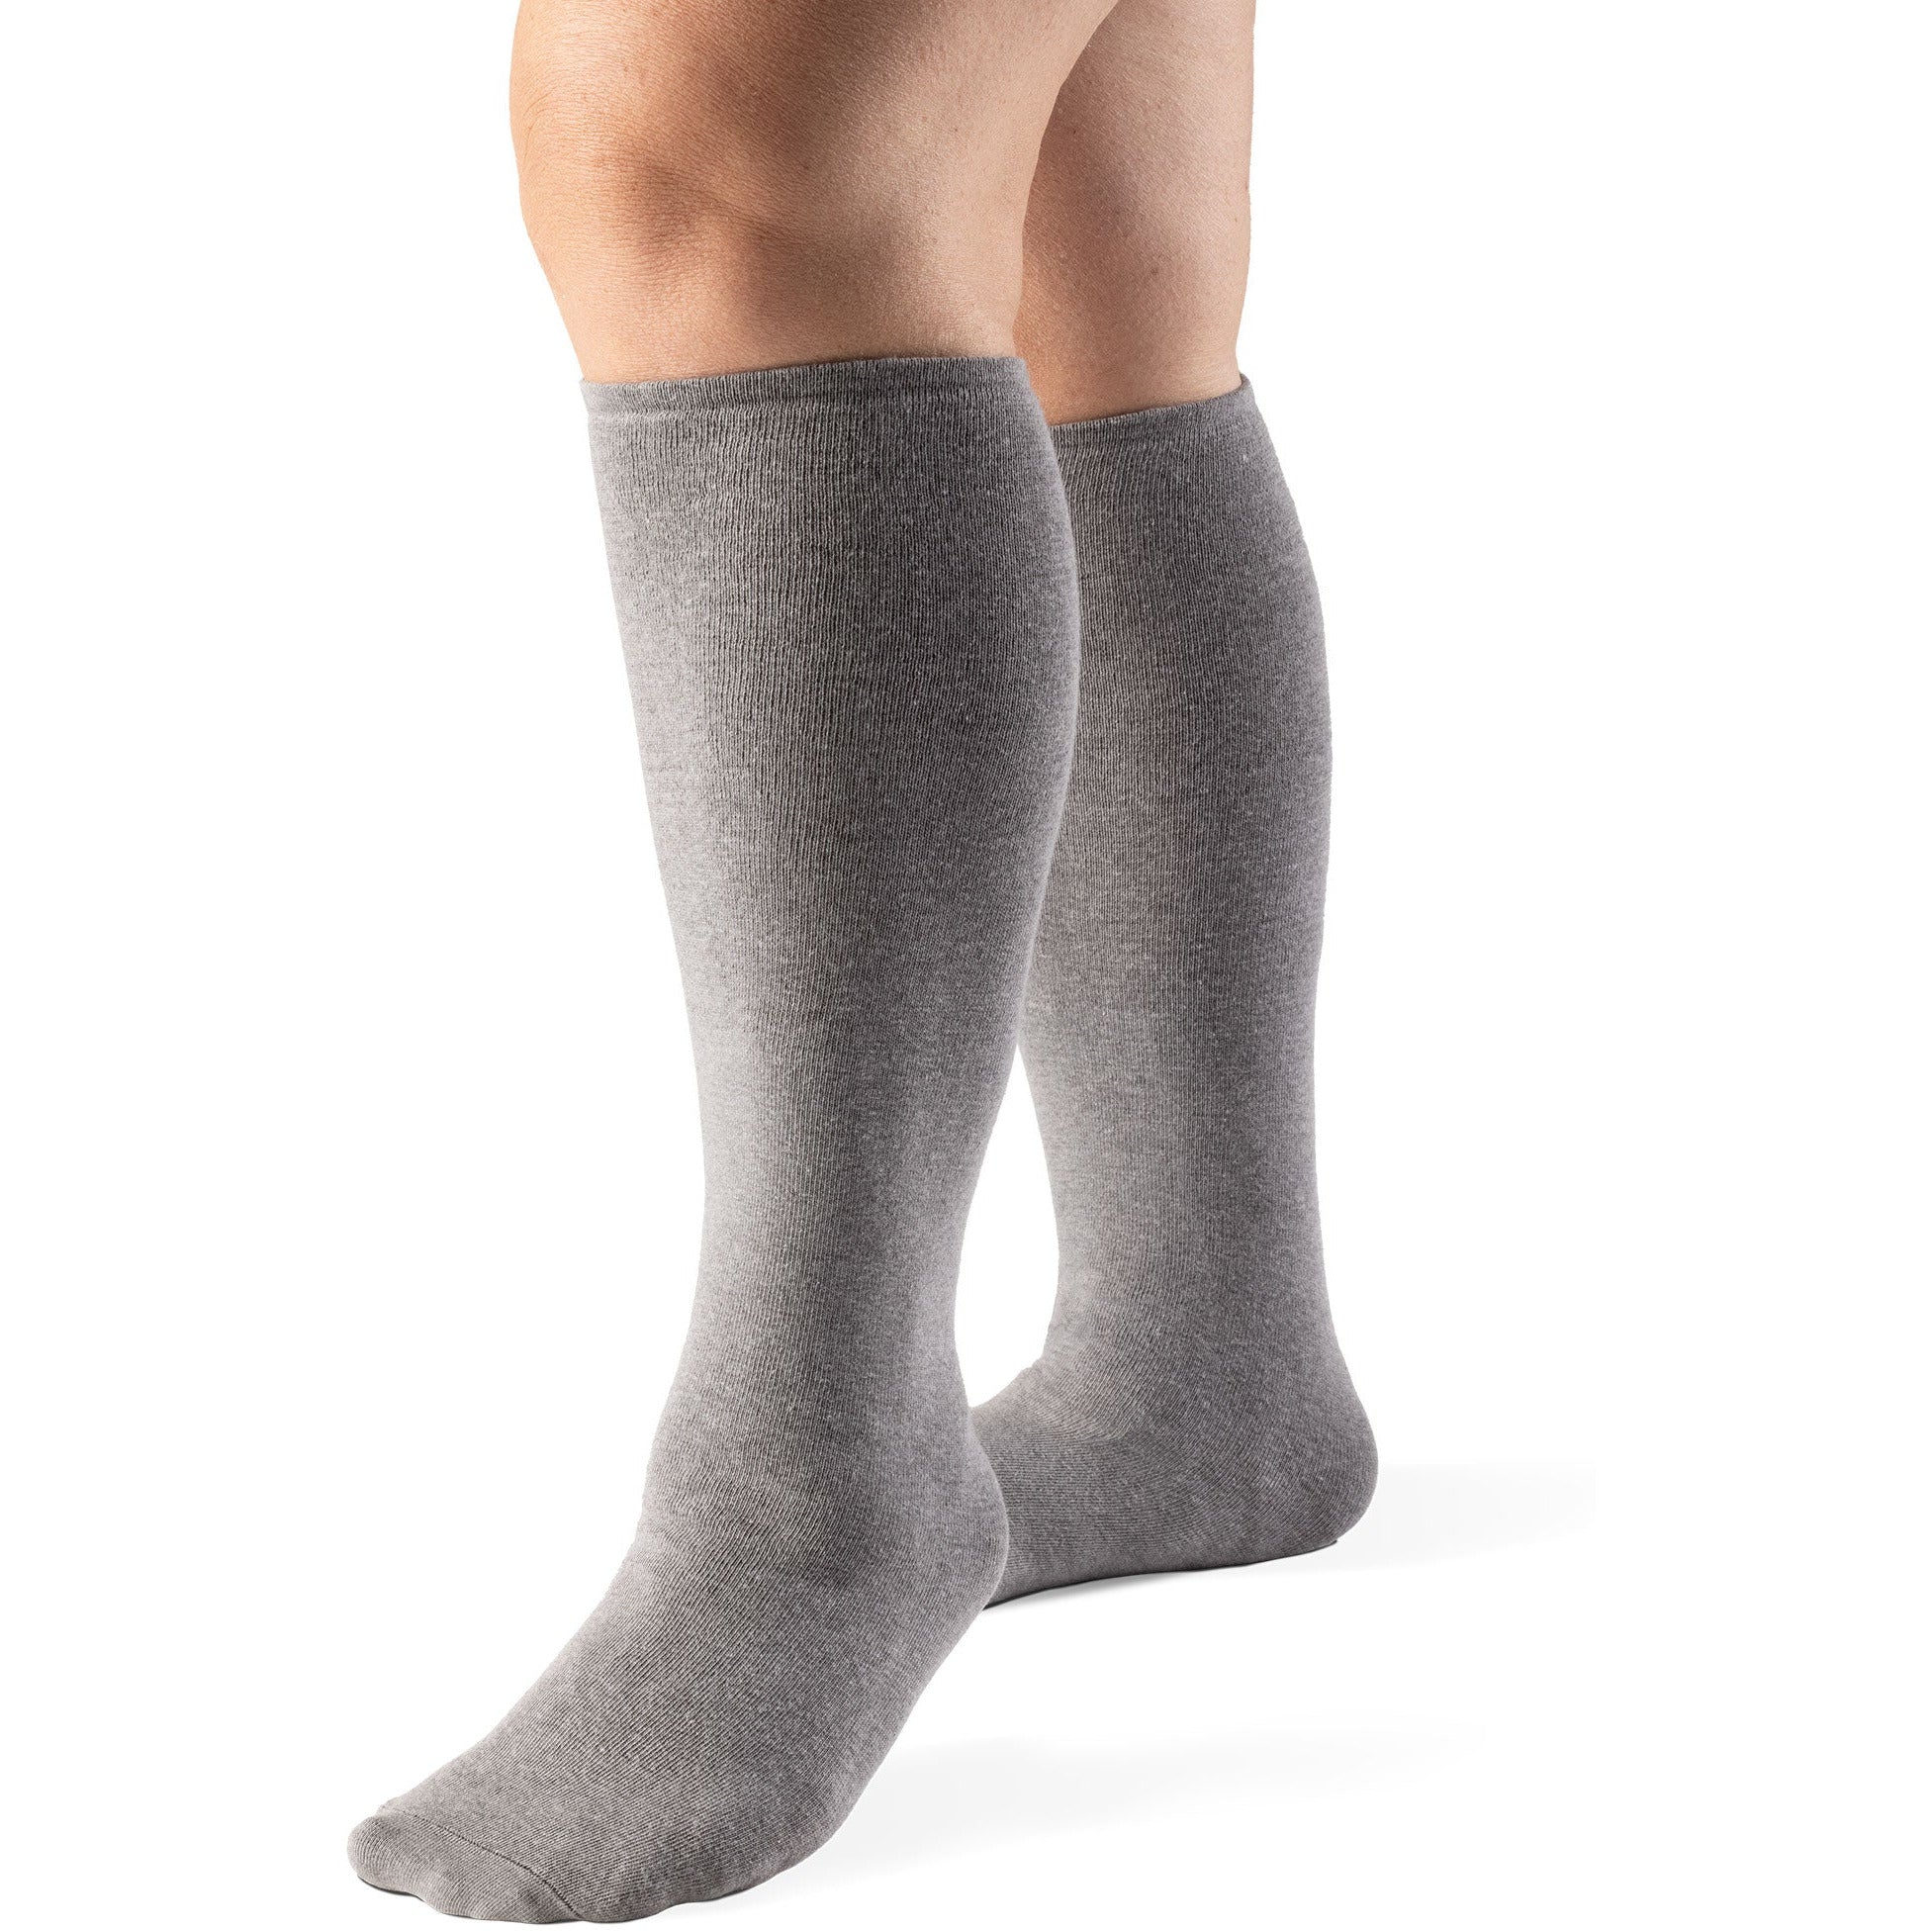 CircAid Comfort Cotton Sock Liner